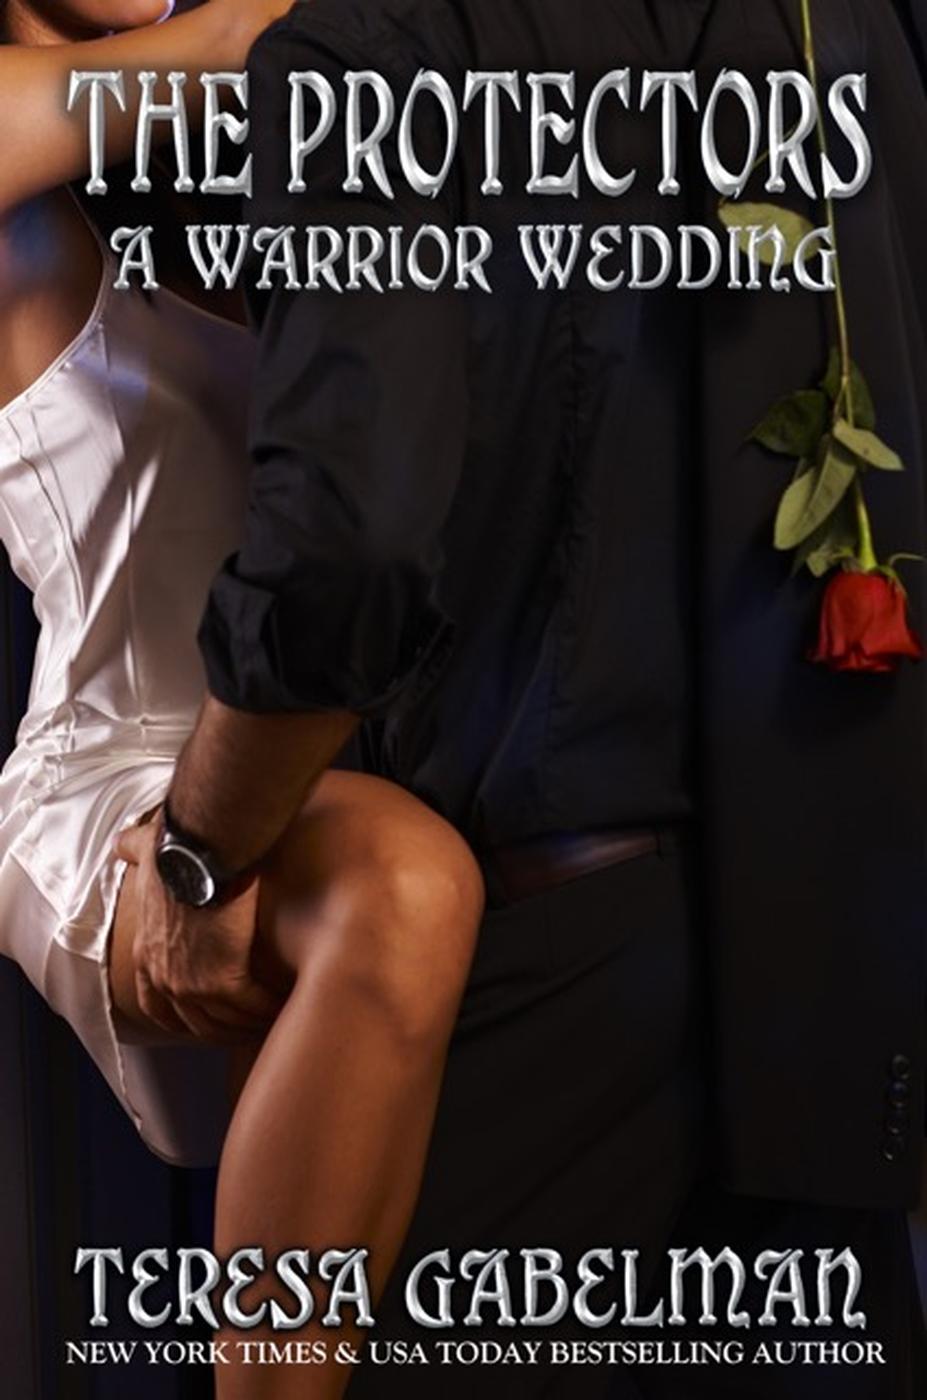 A Warrior Wedding by Teresa Gabelman